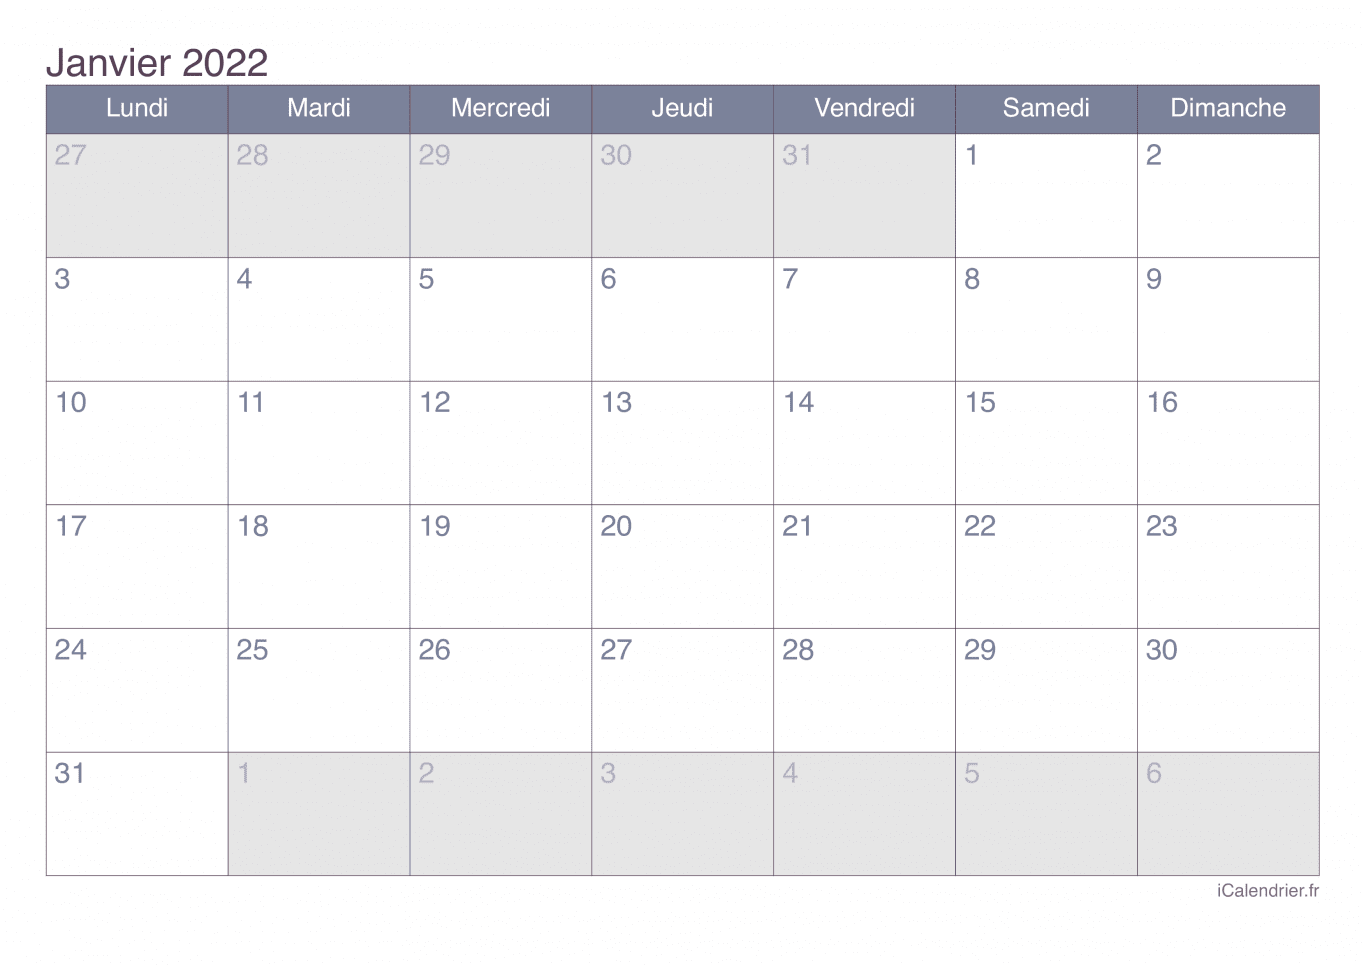 Calendrier de janvier 2022 - Office